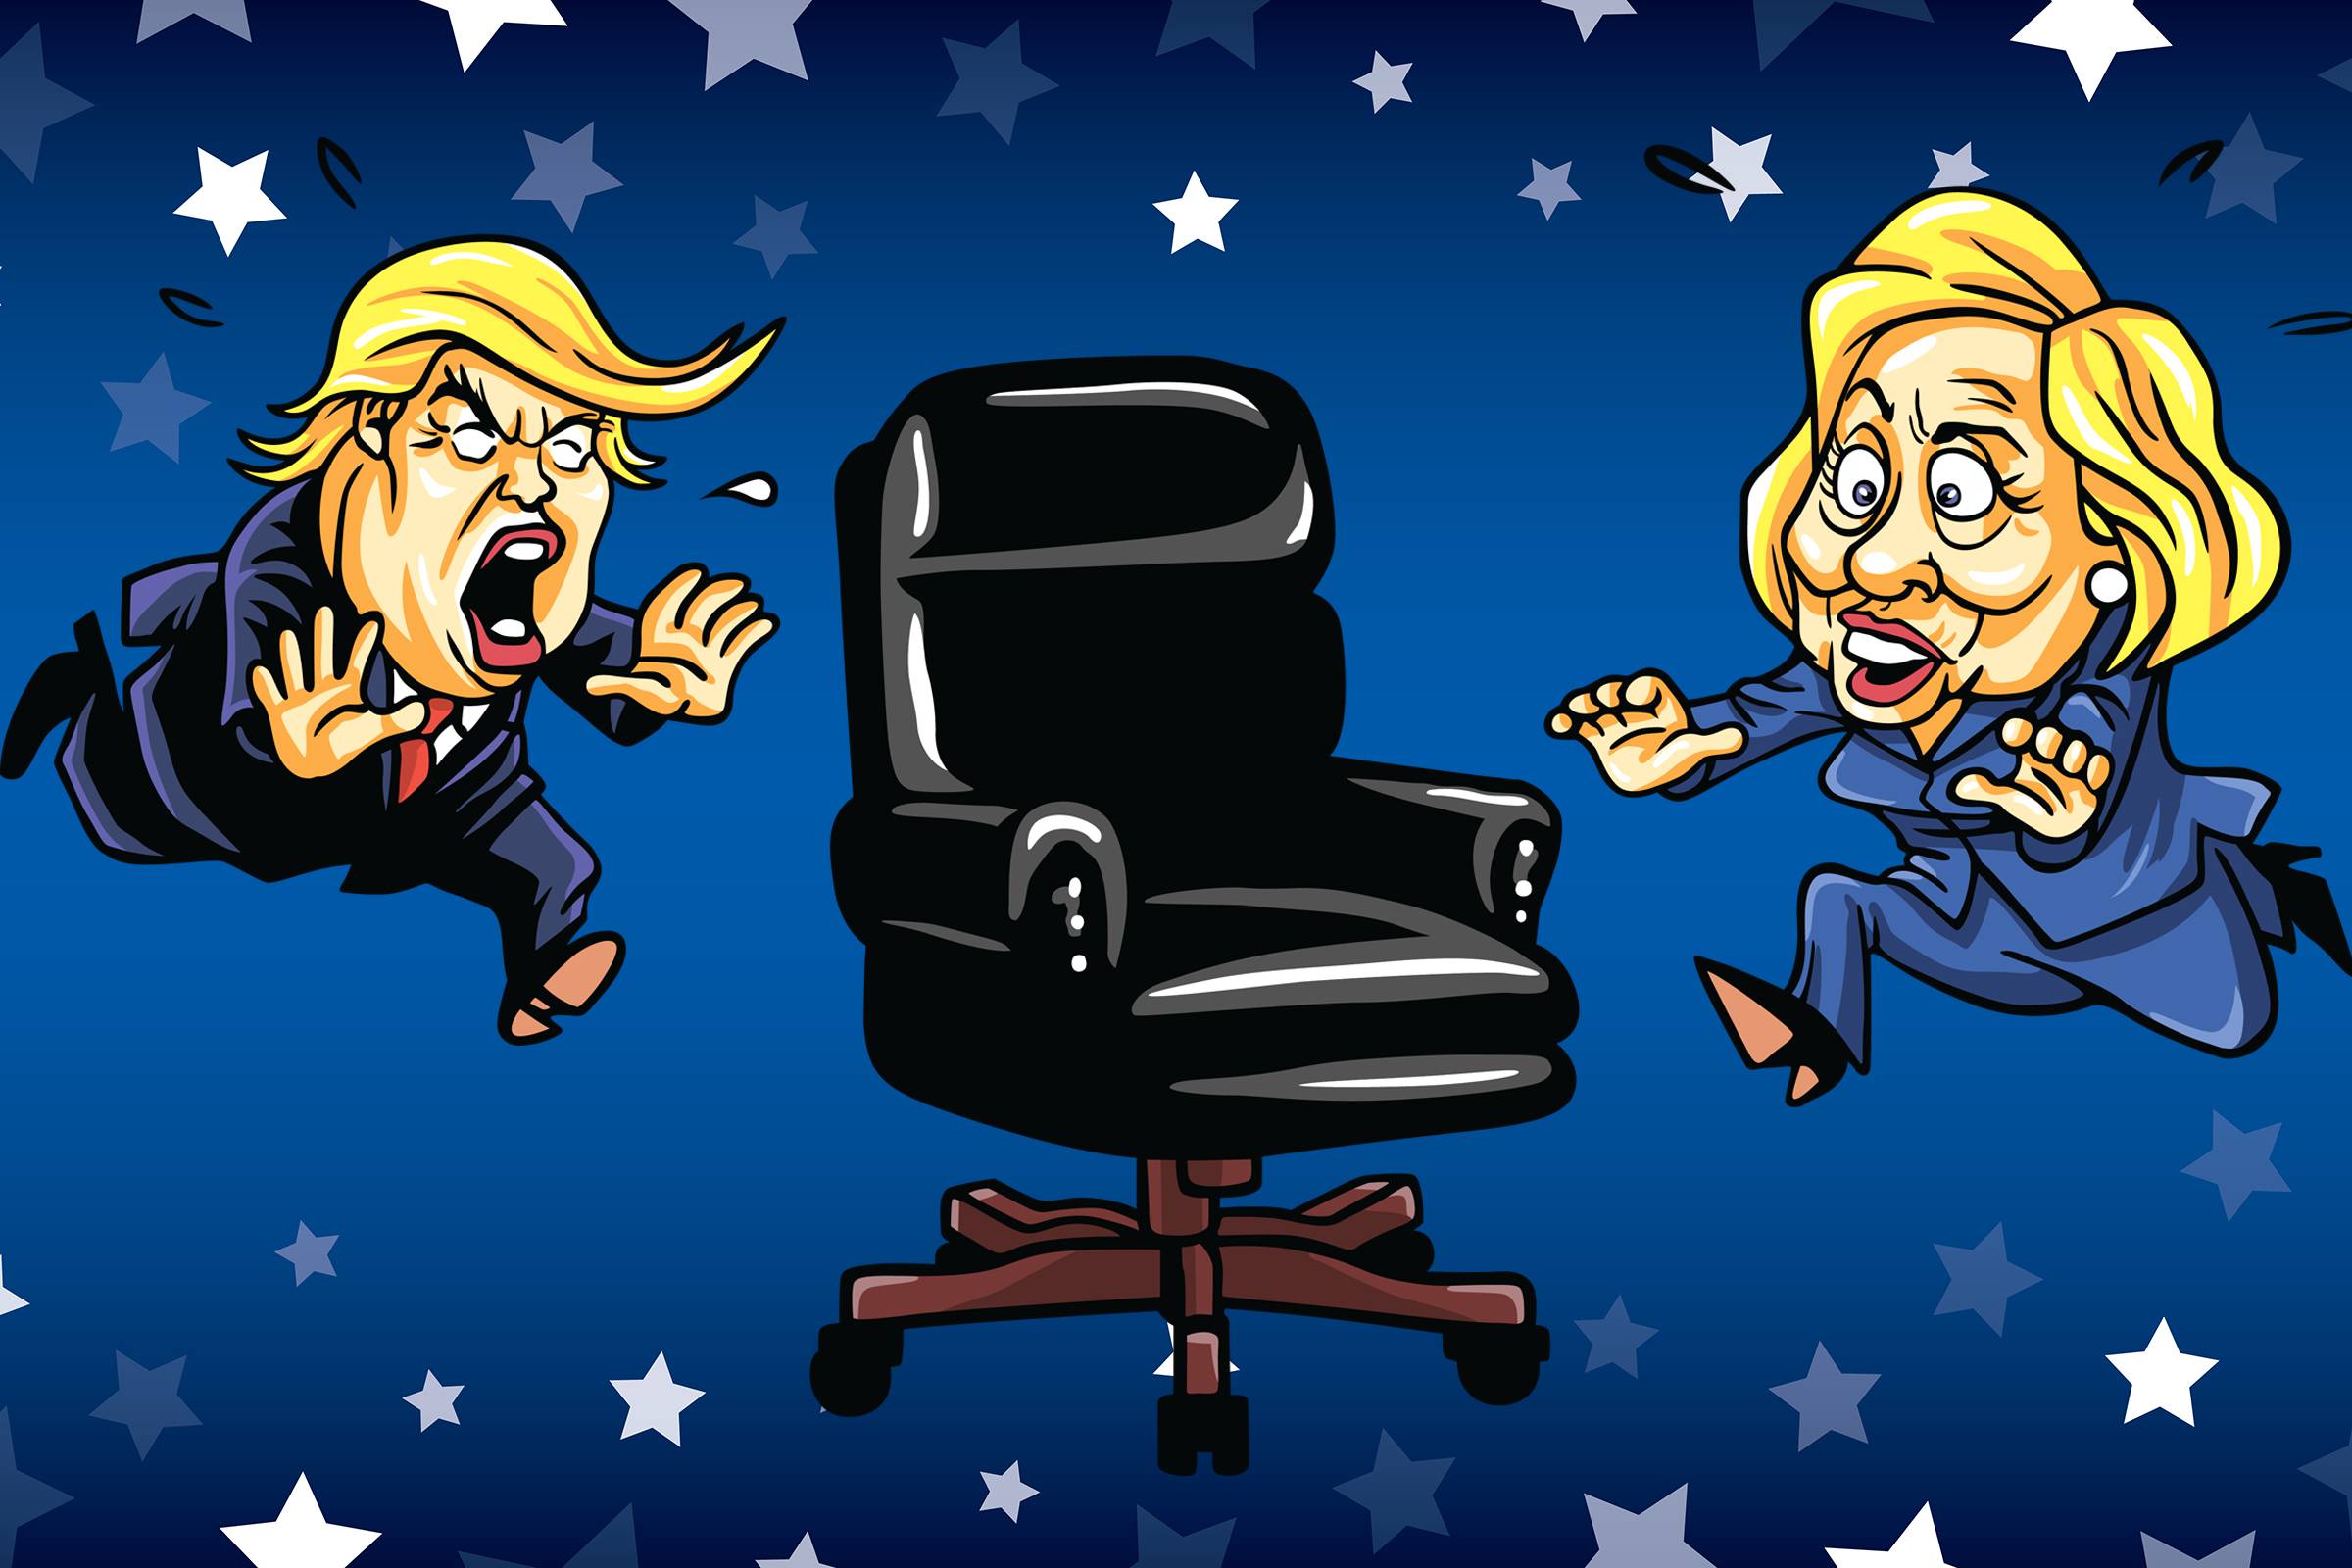 web-trump-clinton-chair-election-graphic-doddis77-shutterstock_103708799-comp-aleteia-image